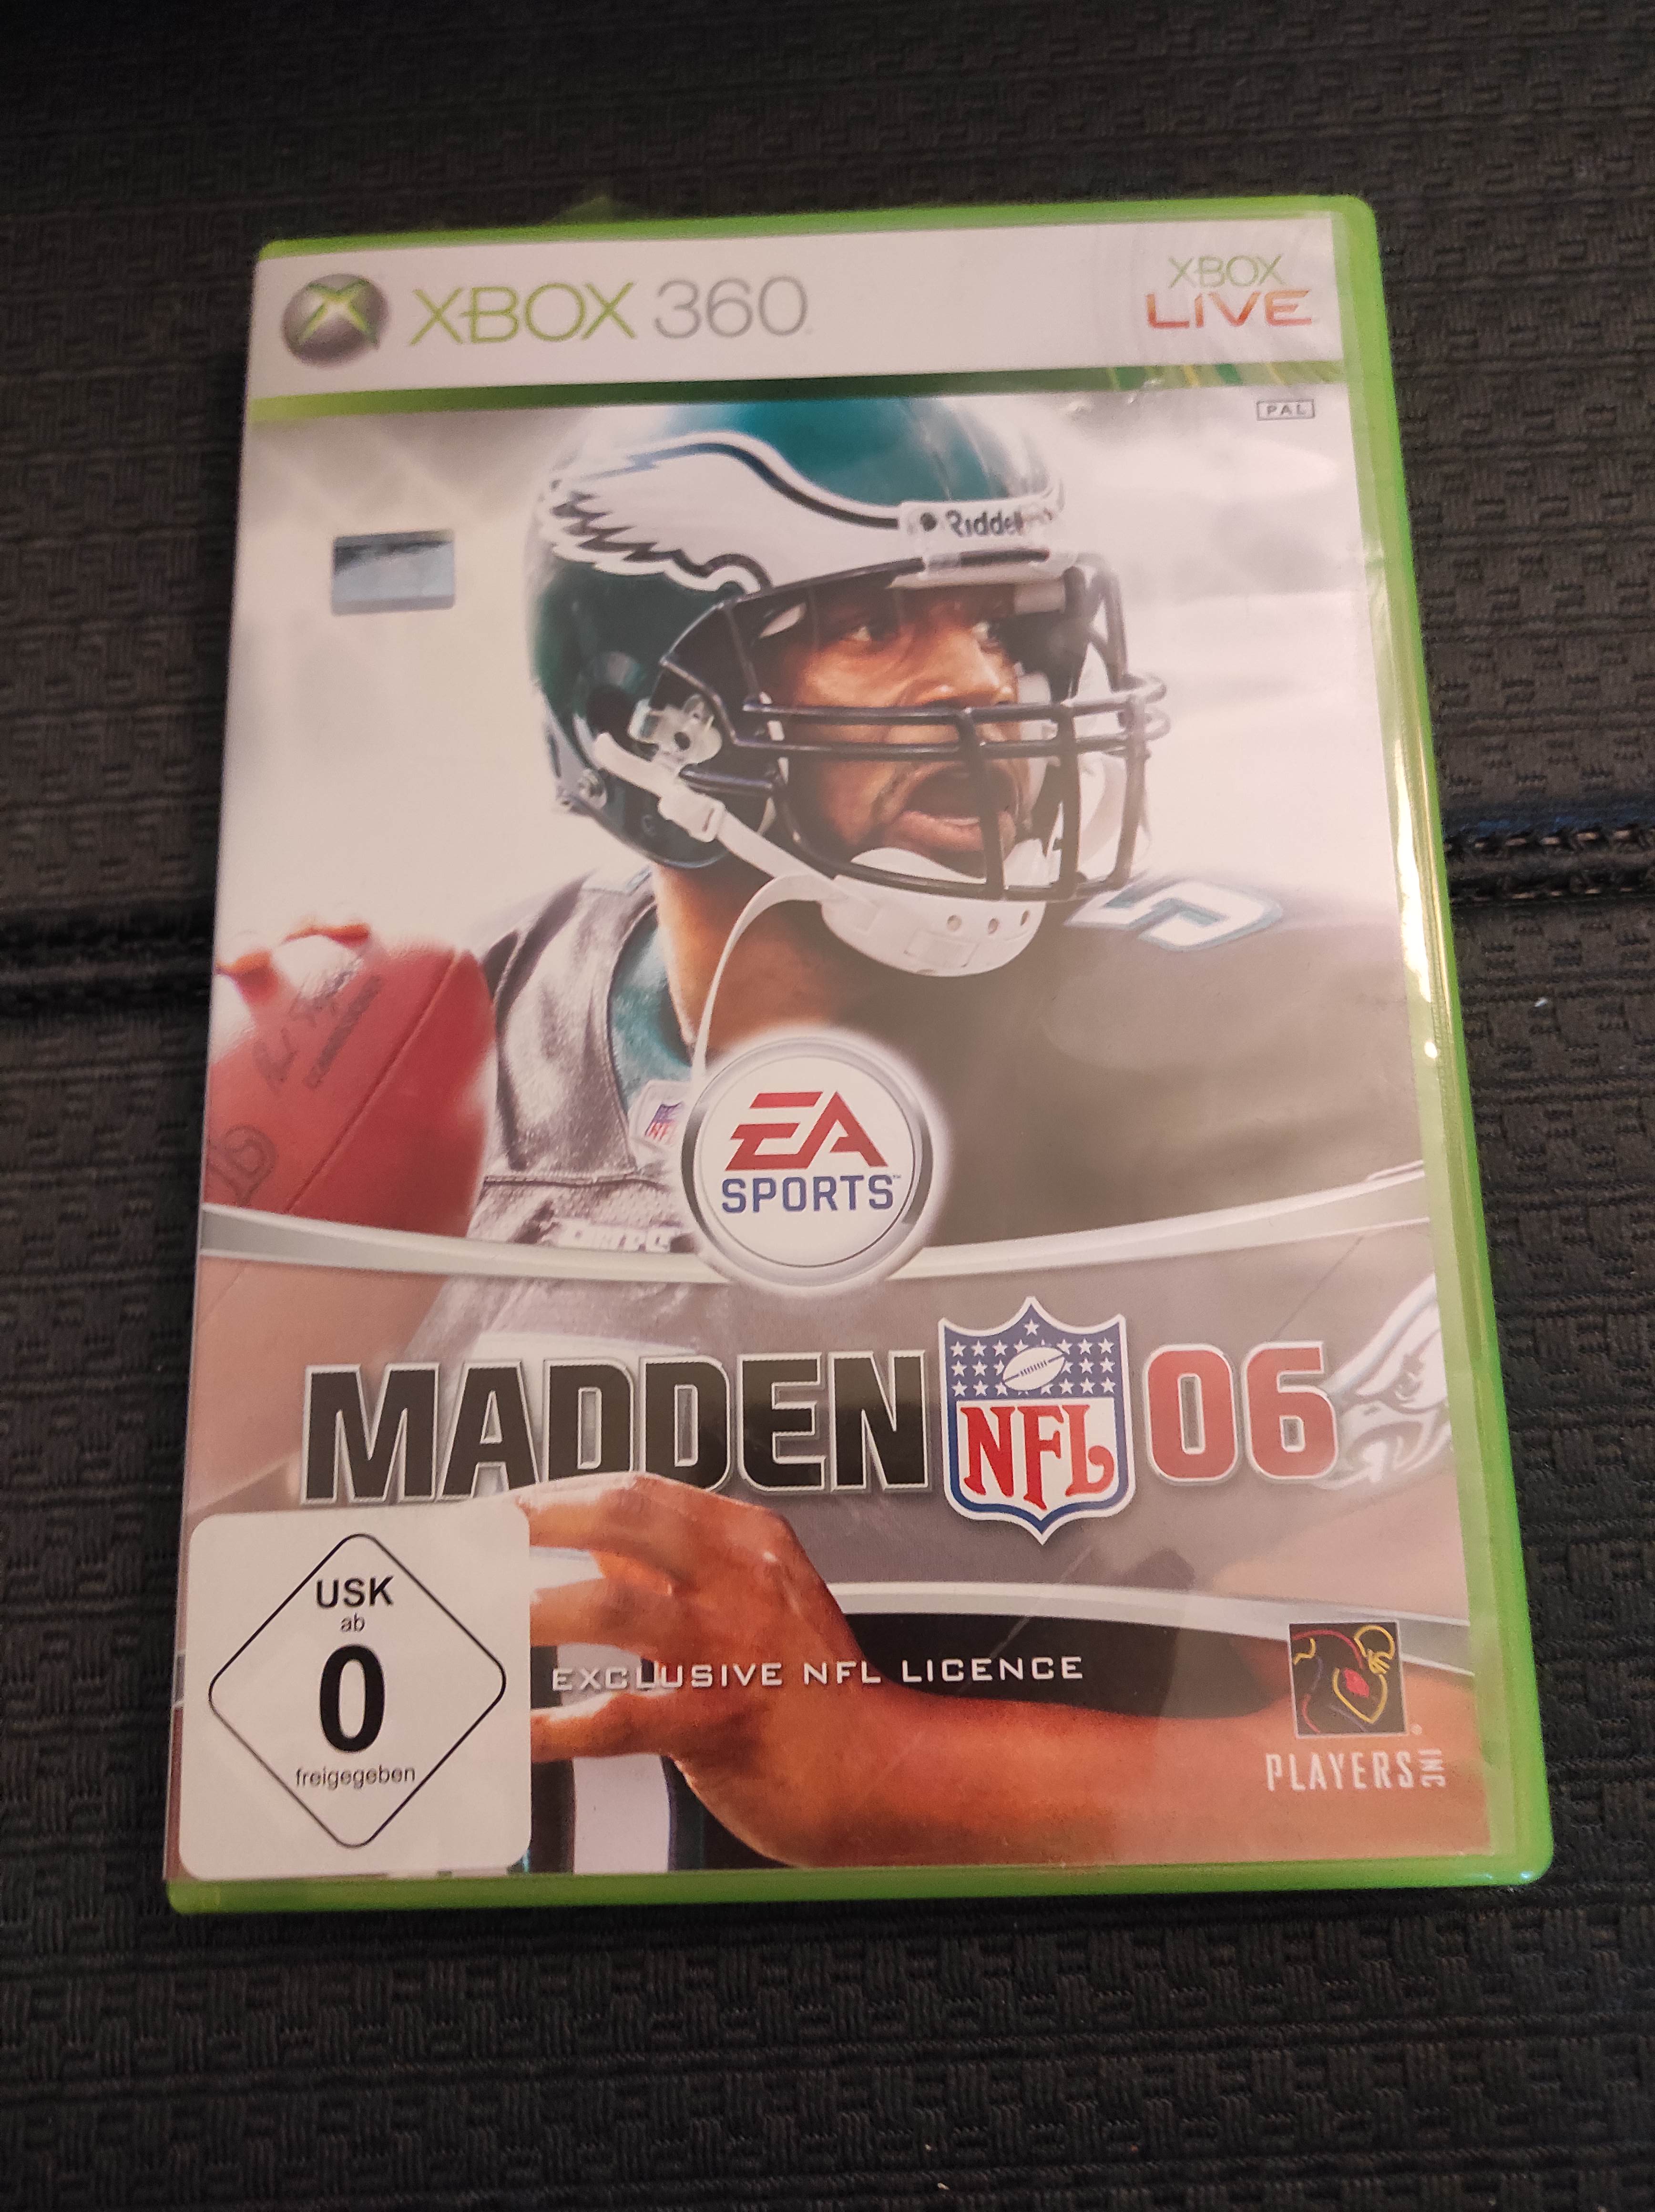 XBOX 360 Madden NFL 06